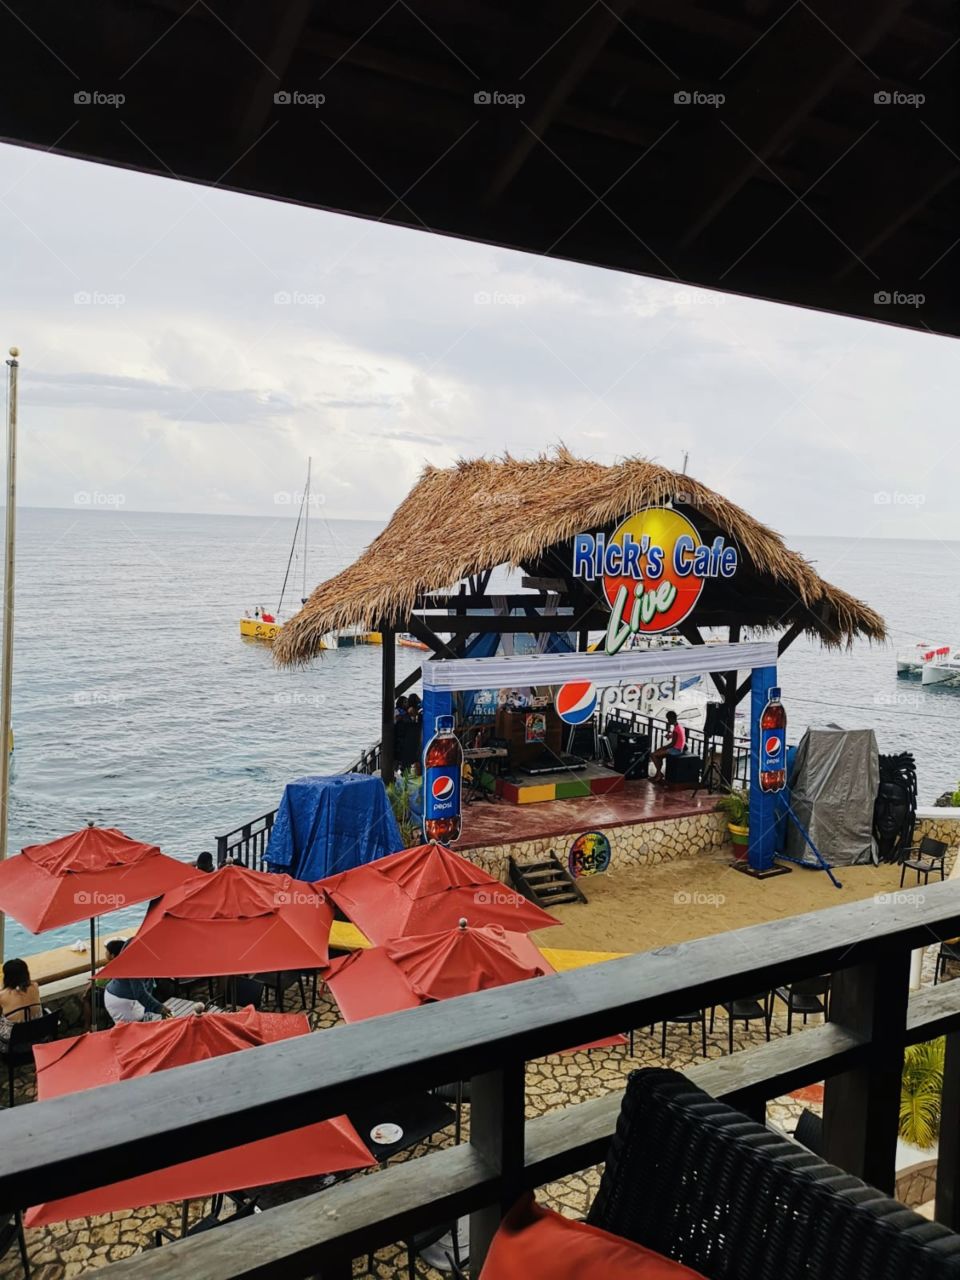 Cool bar Jamaica 🇯🇲